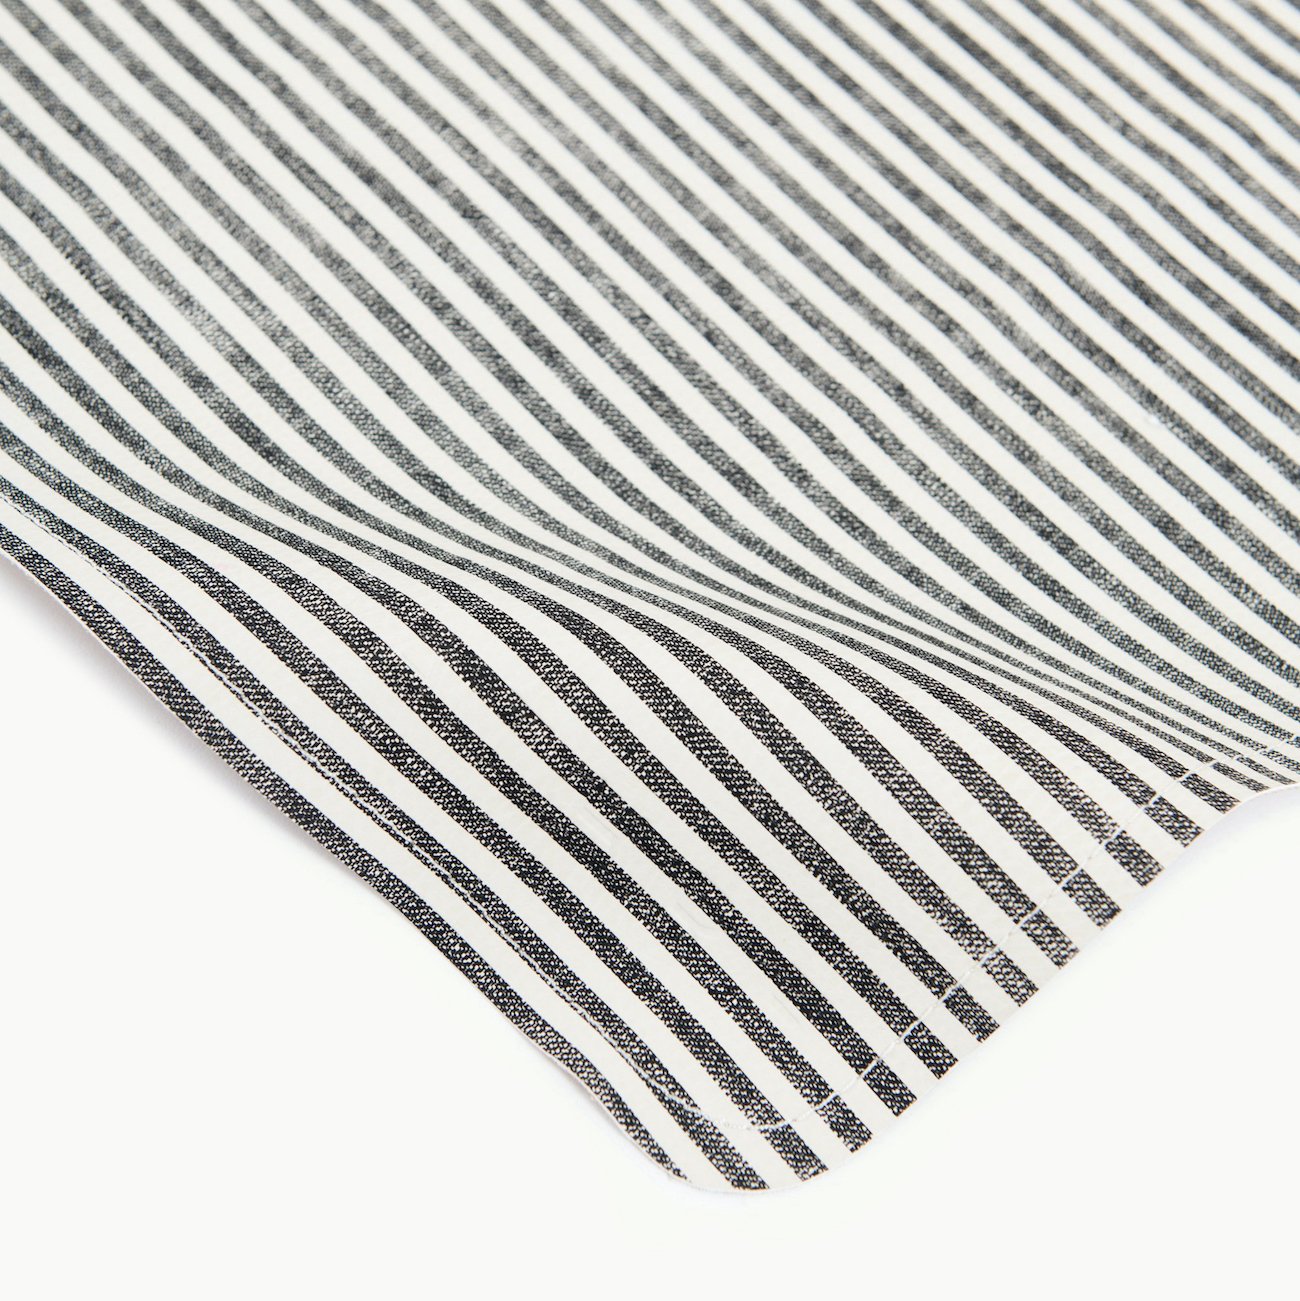 Stone Stripe@Gathre deboss detail on the Stone Stripe Micro mat